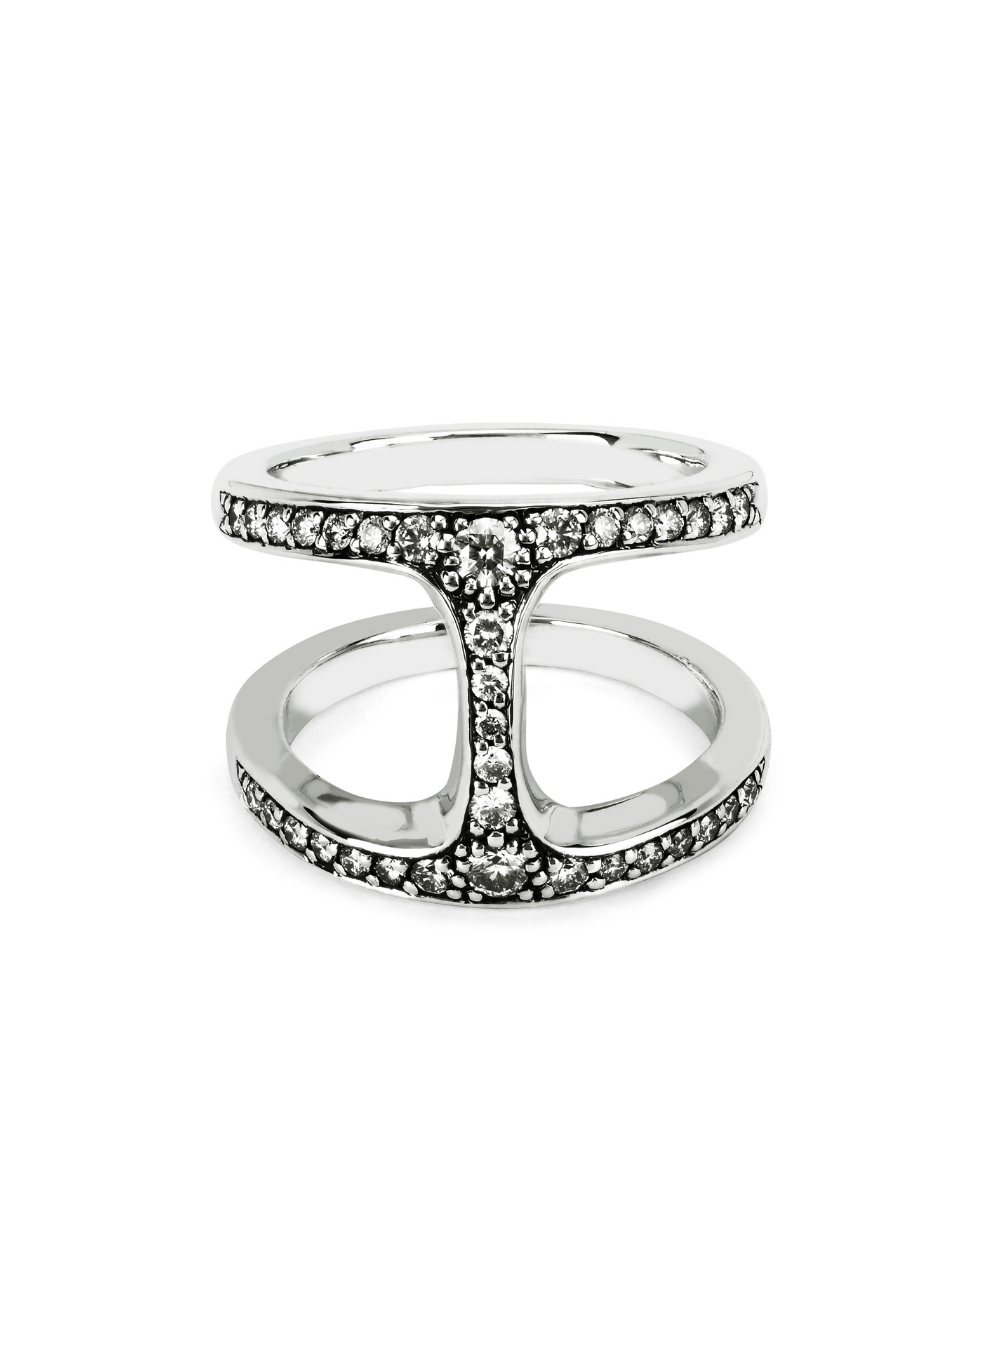 HOORSENBUHS | Dame Phantom with Diamonds Ring in Sterling Silver